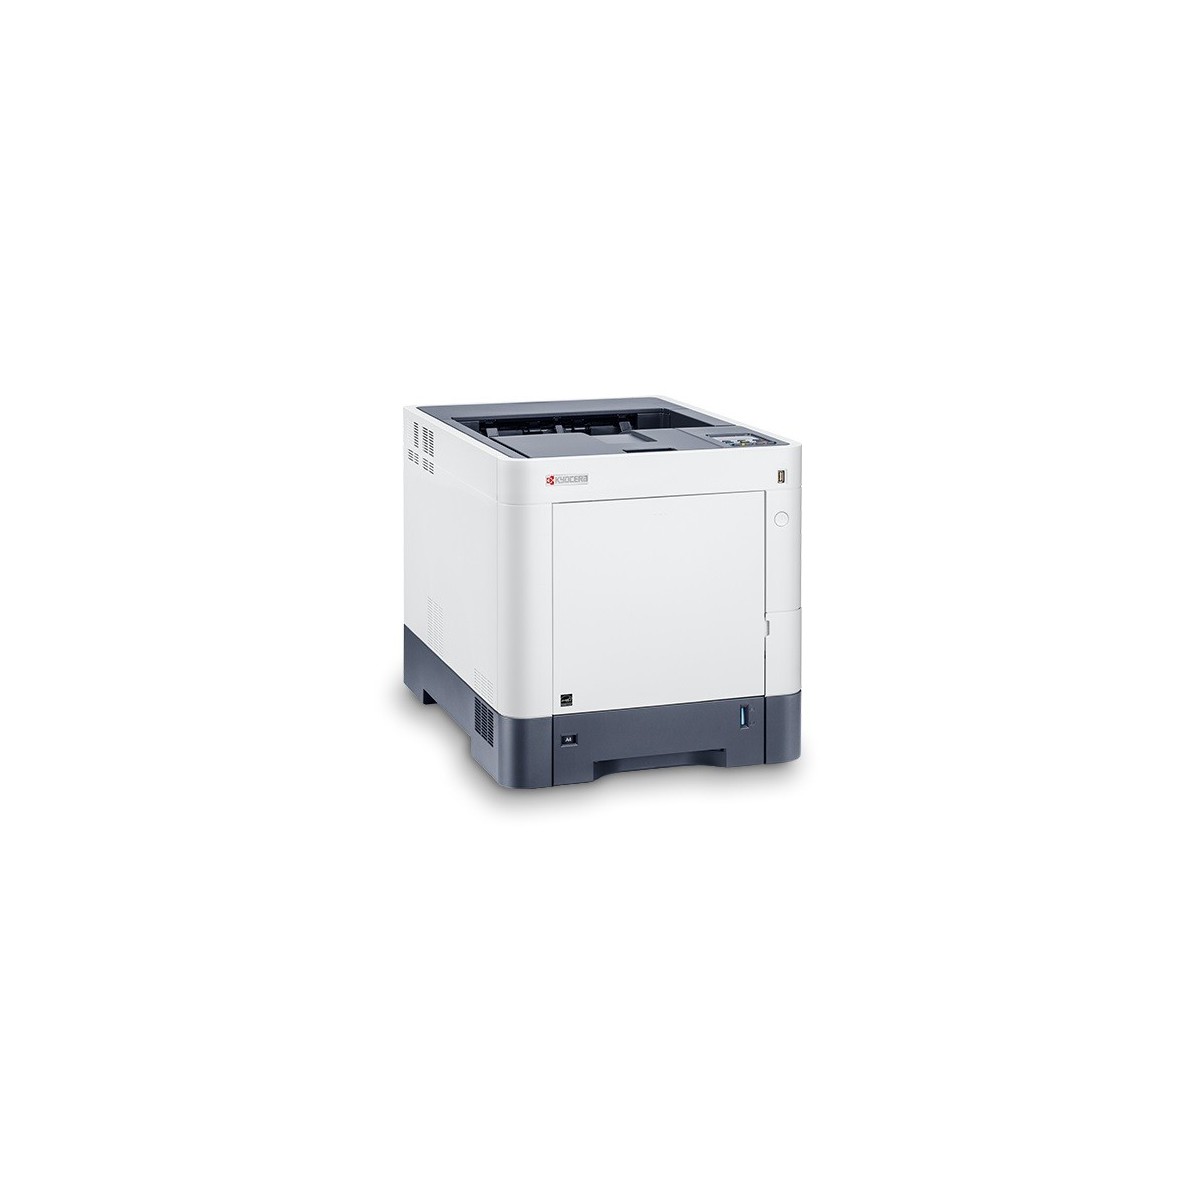 Kyocera ECOSYS P6230cdn/KL3 - Laser - Colour - 9600 x 600 DPI - A4 - 30 ppm - Duplex printing